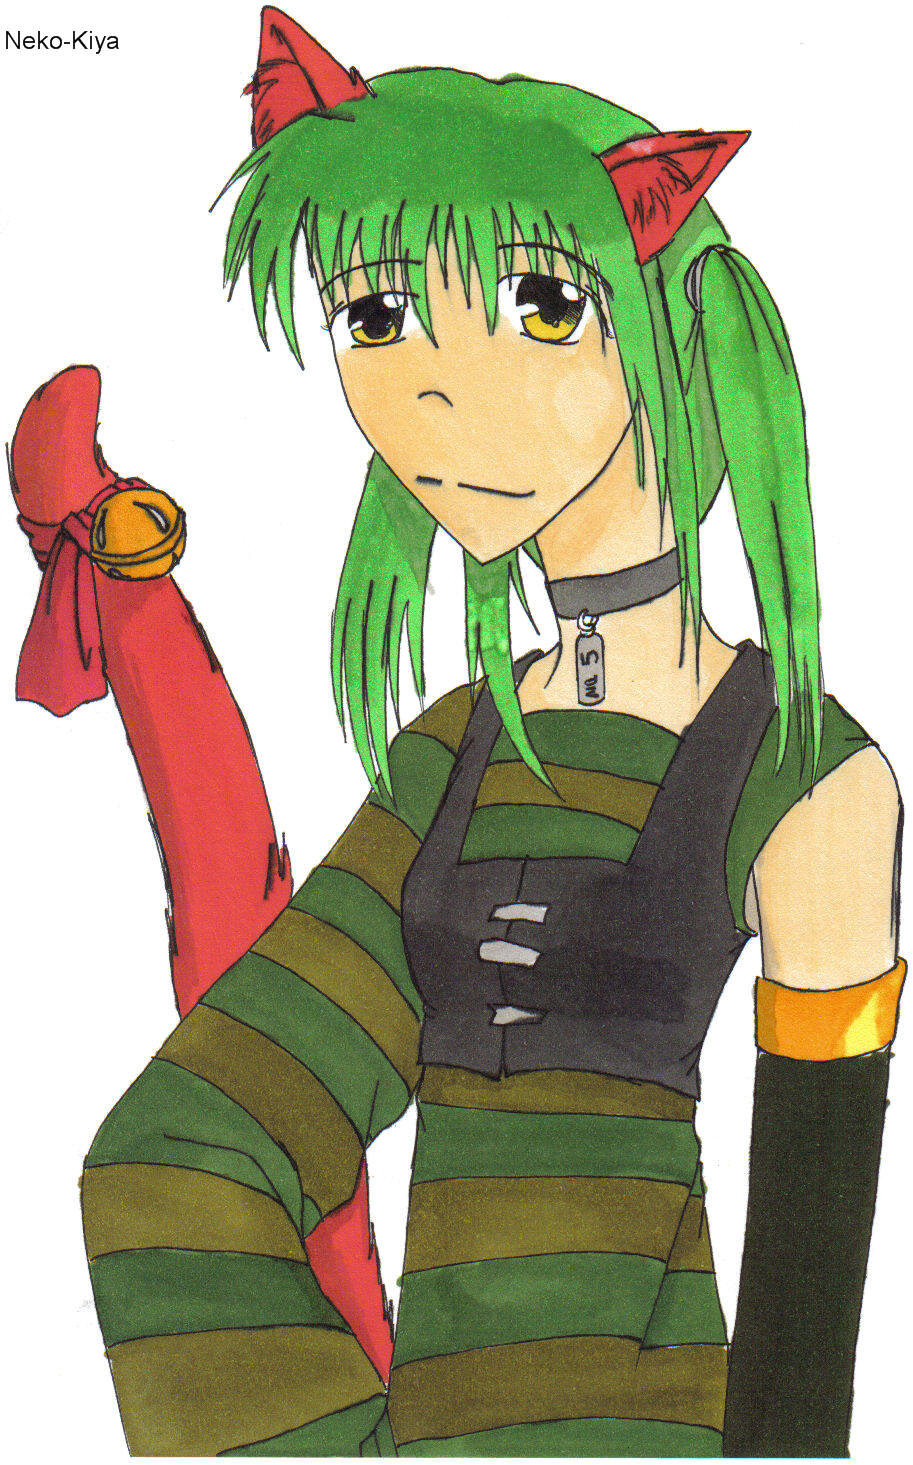 Neko Kiya! In an awsome outfit! by Dragon_Girl